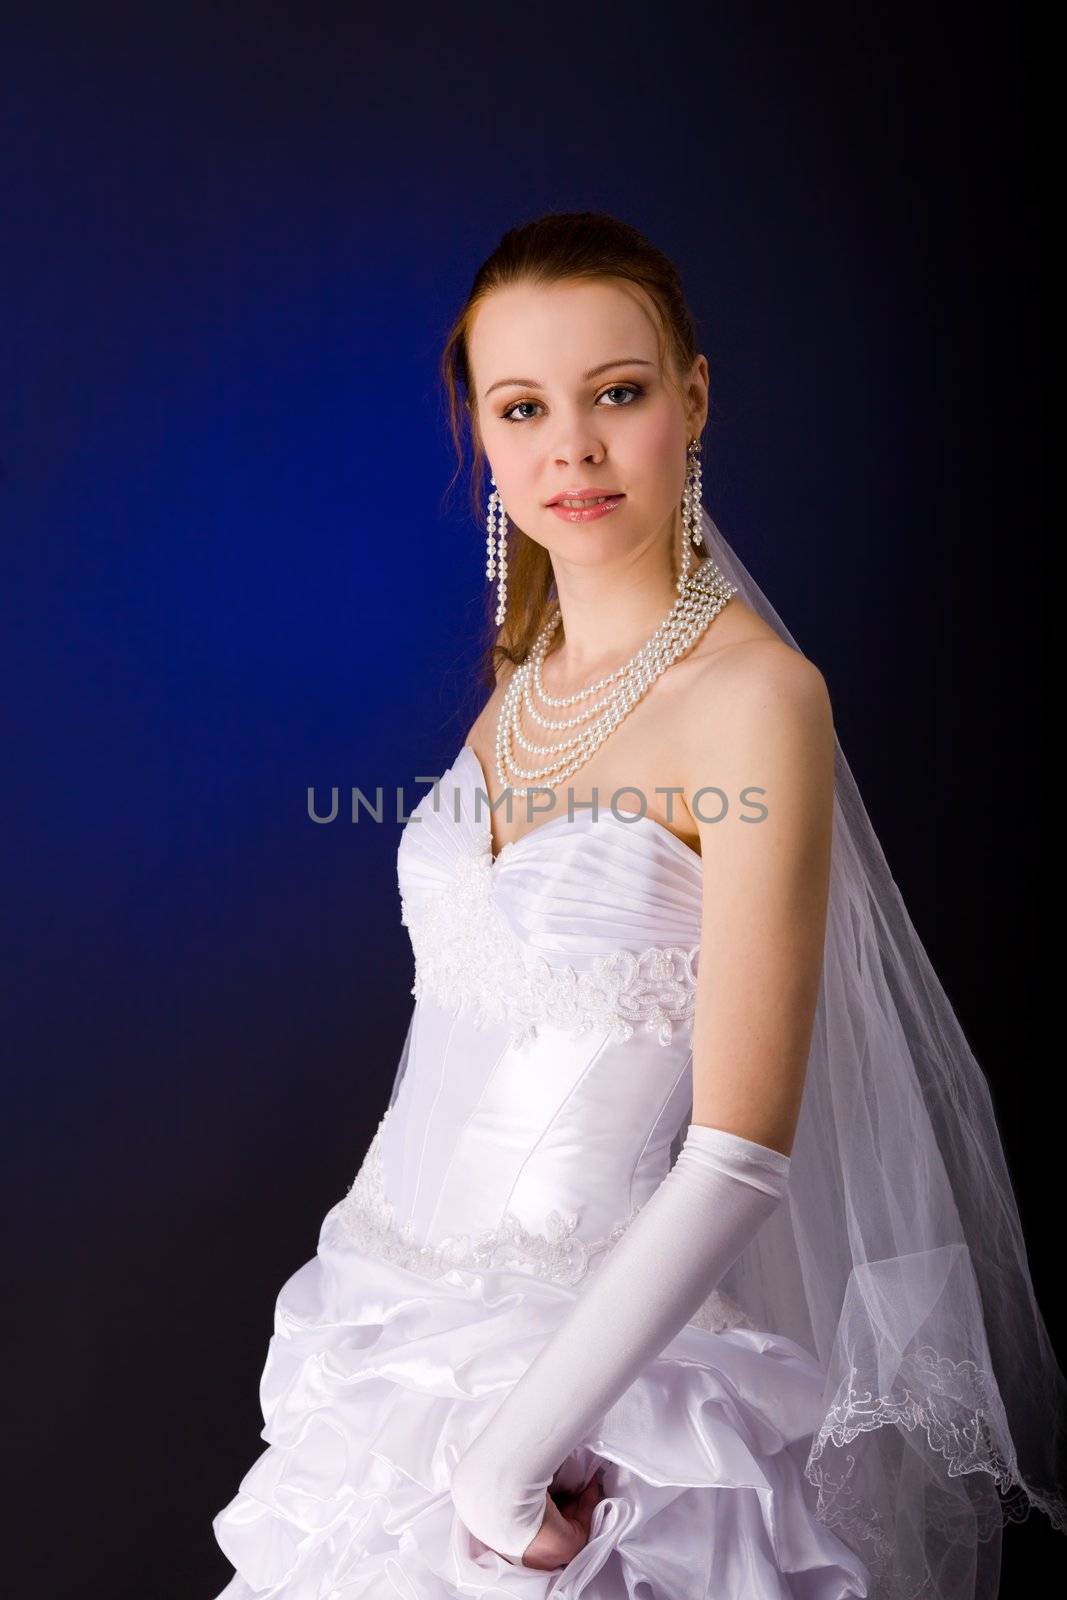 Bride with piercing look over dark blue background